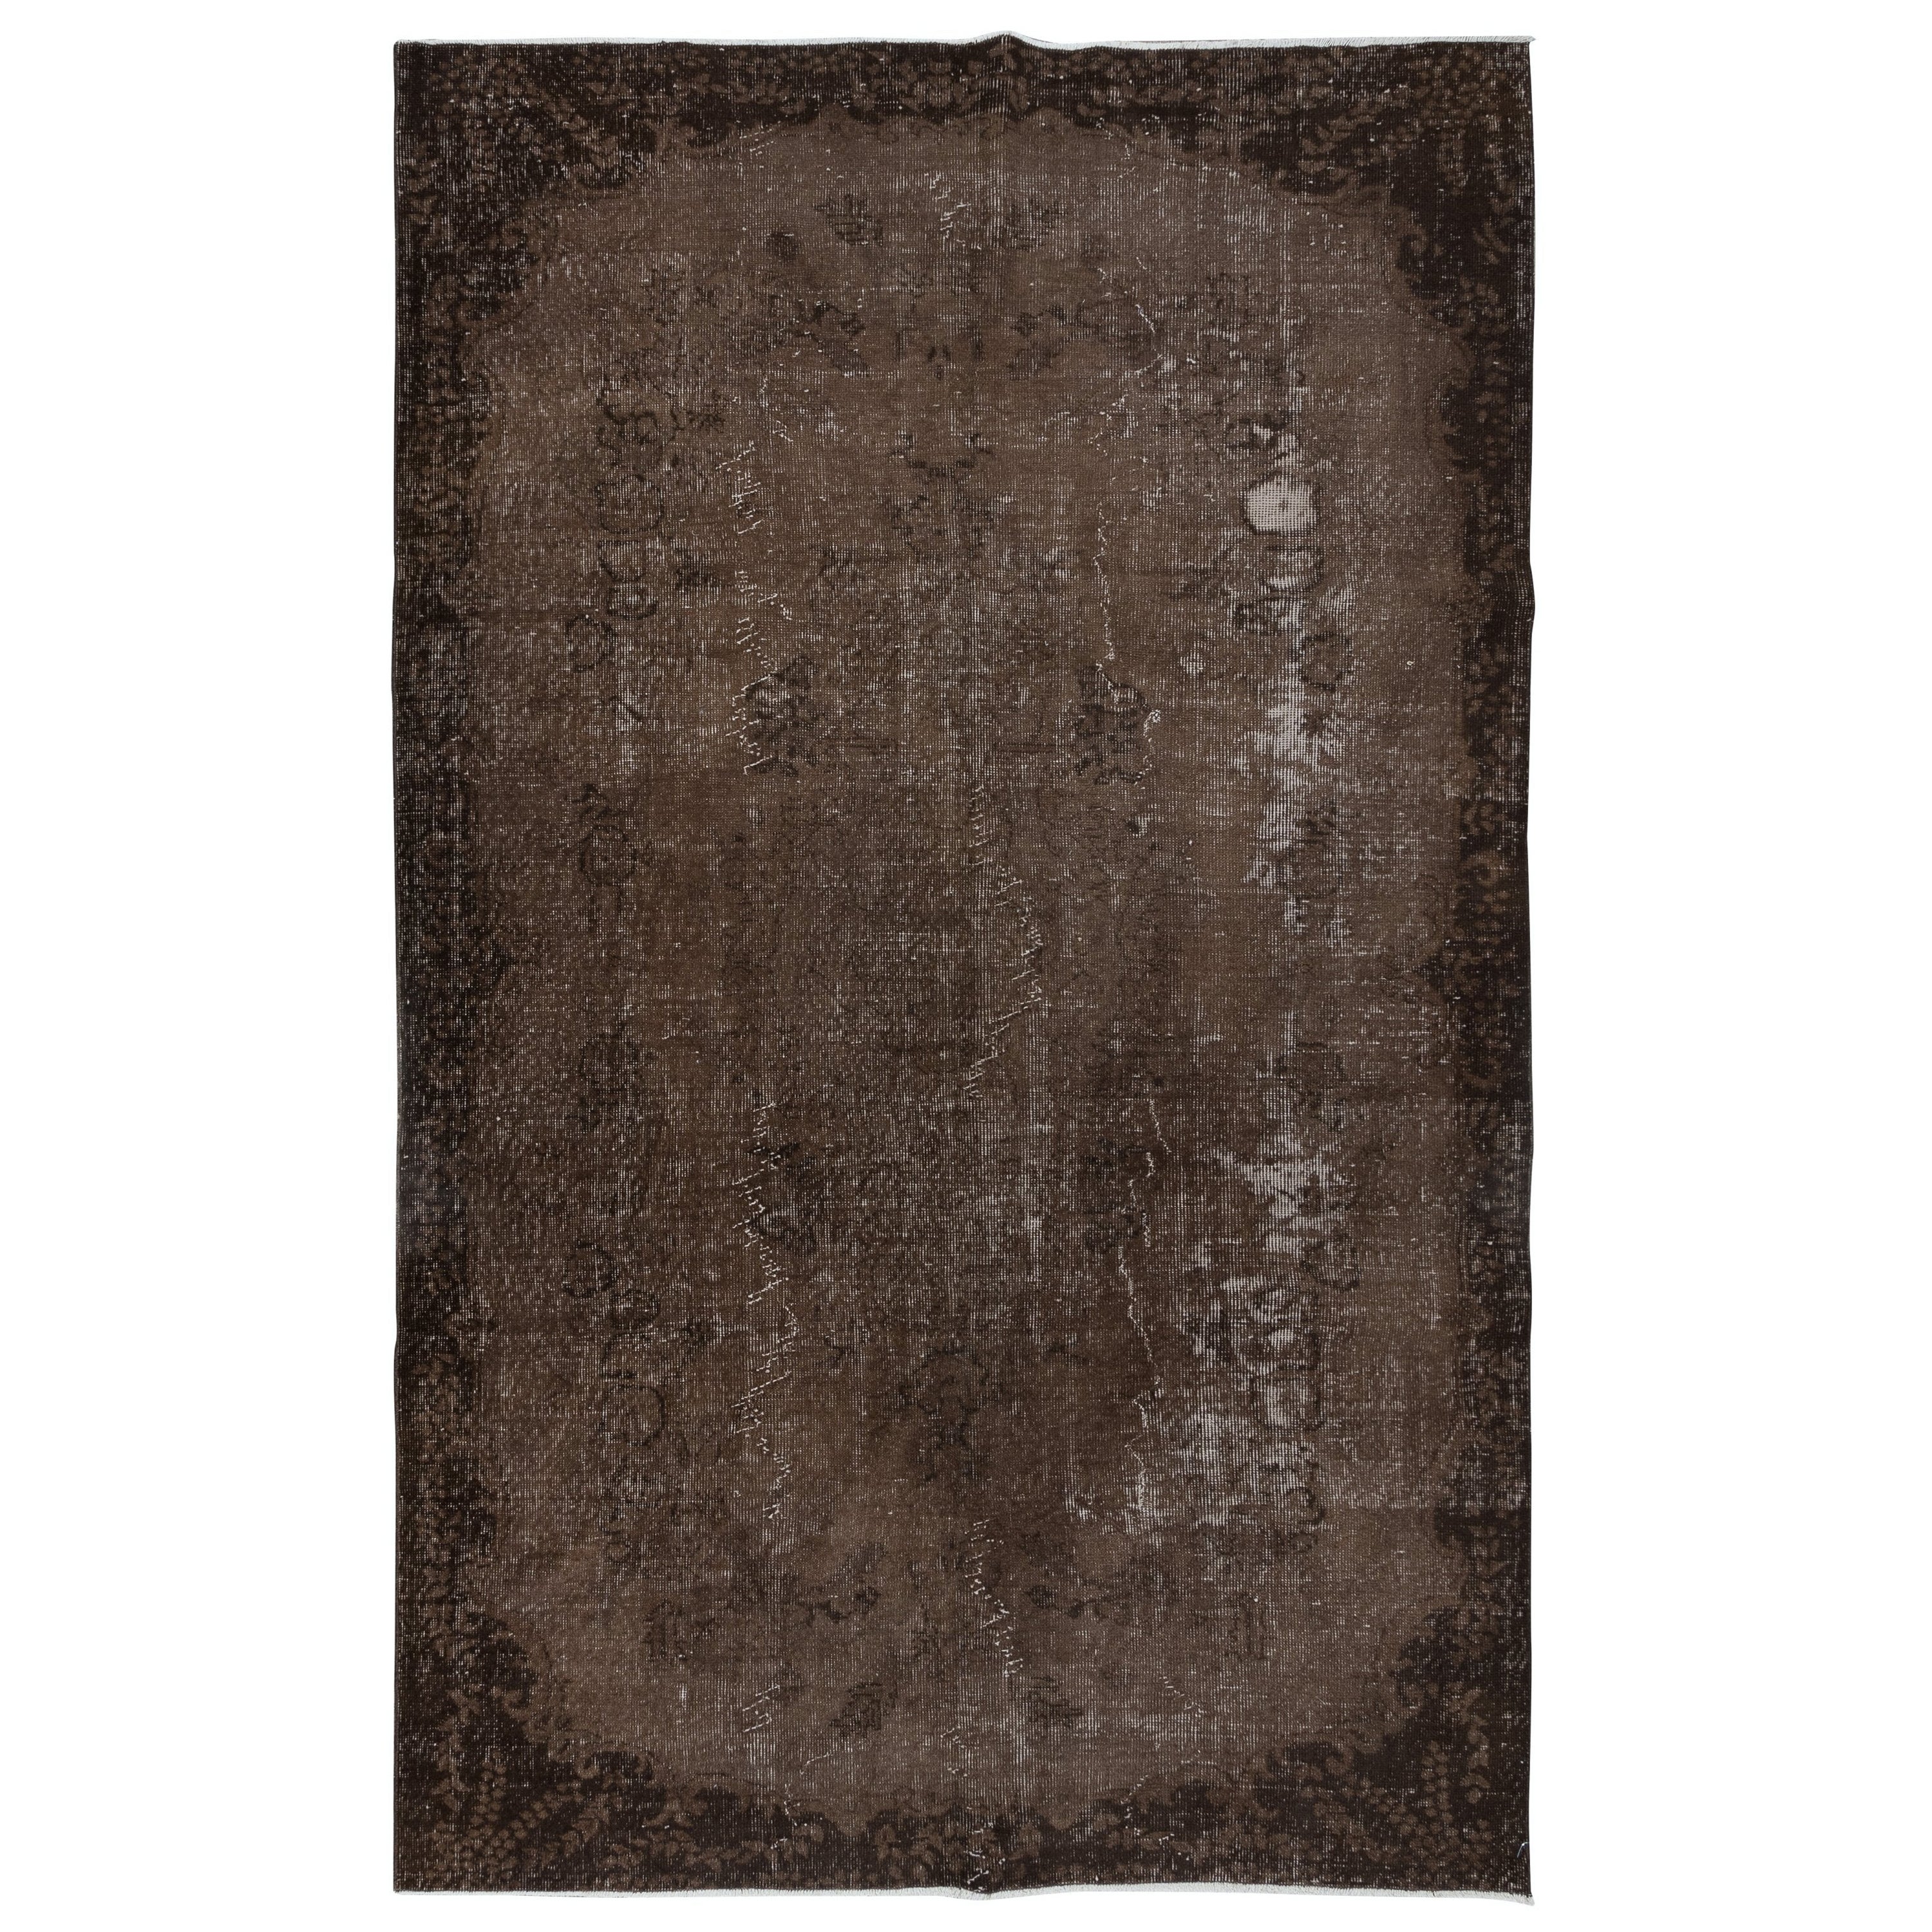 6.2x9.8 Ft Modern Handmade Turkish Rug in Brown, Vintage Wool and Cotton Carpet (tapis en laine et coton)